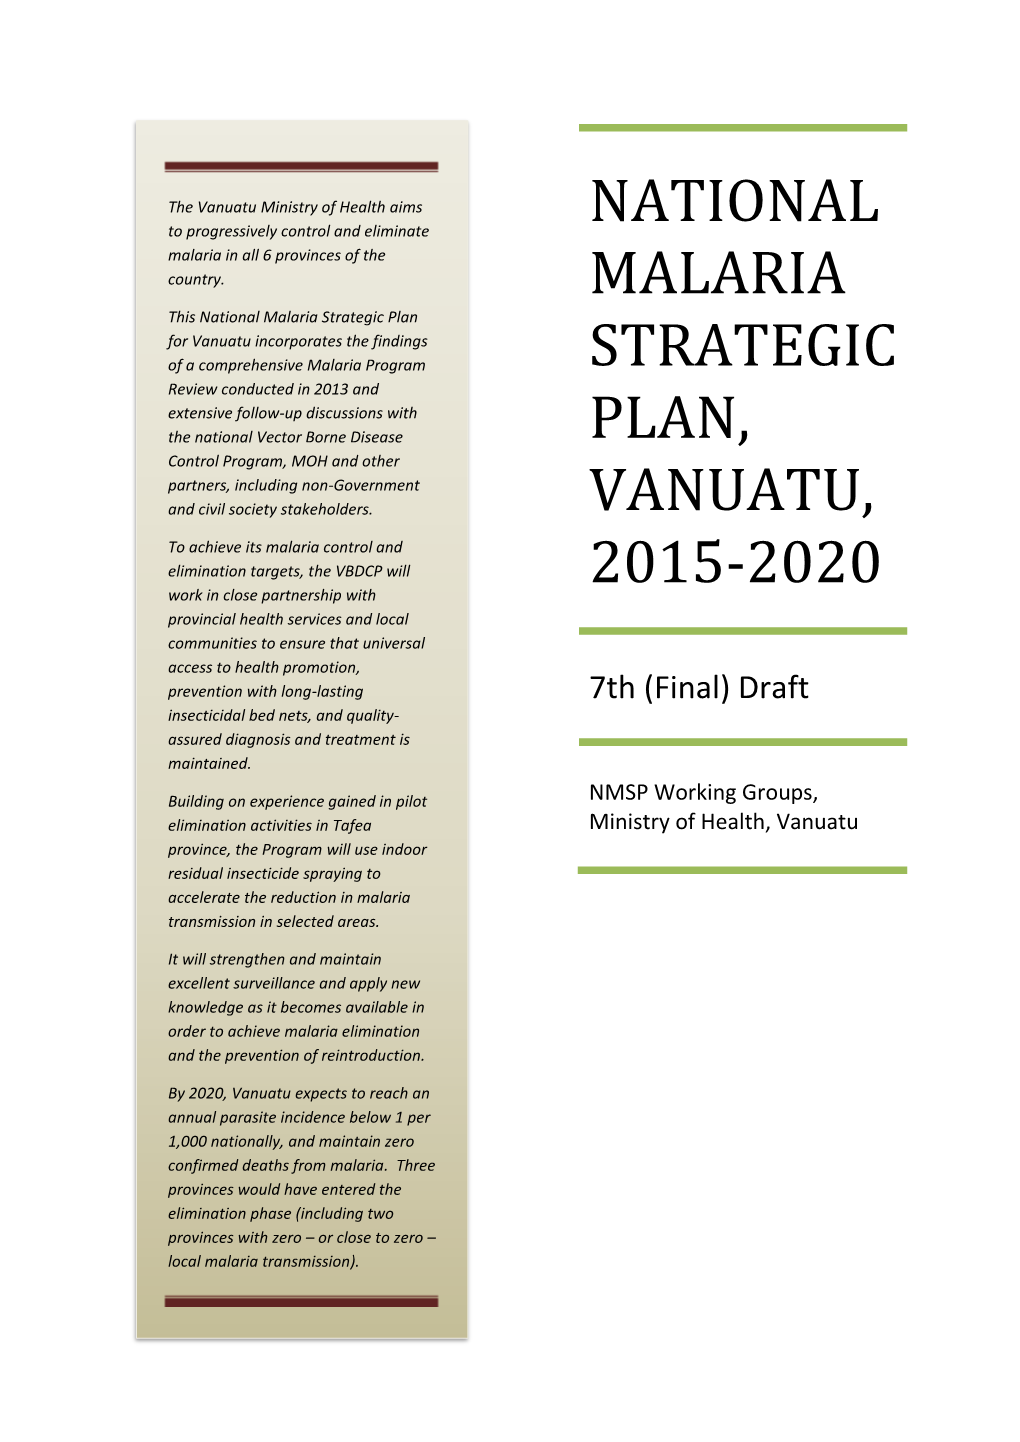 National Malaria Strategic Plan, Vanuatu, 2015-2020